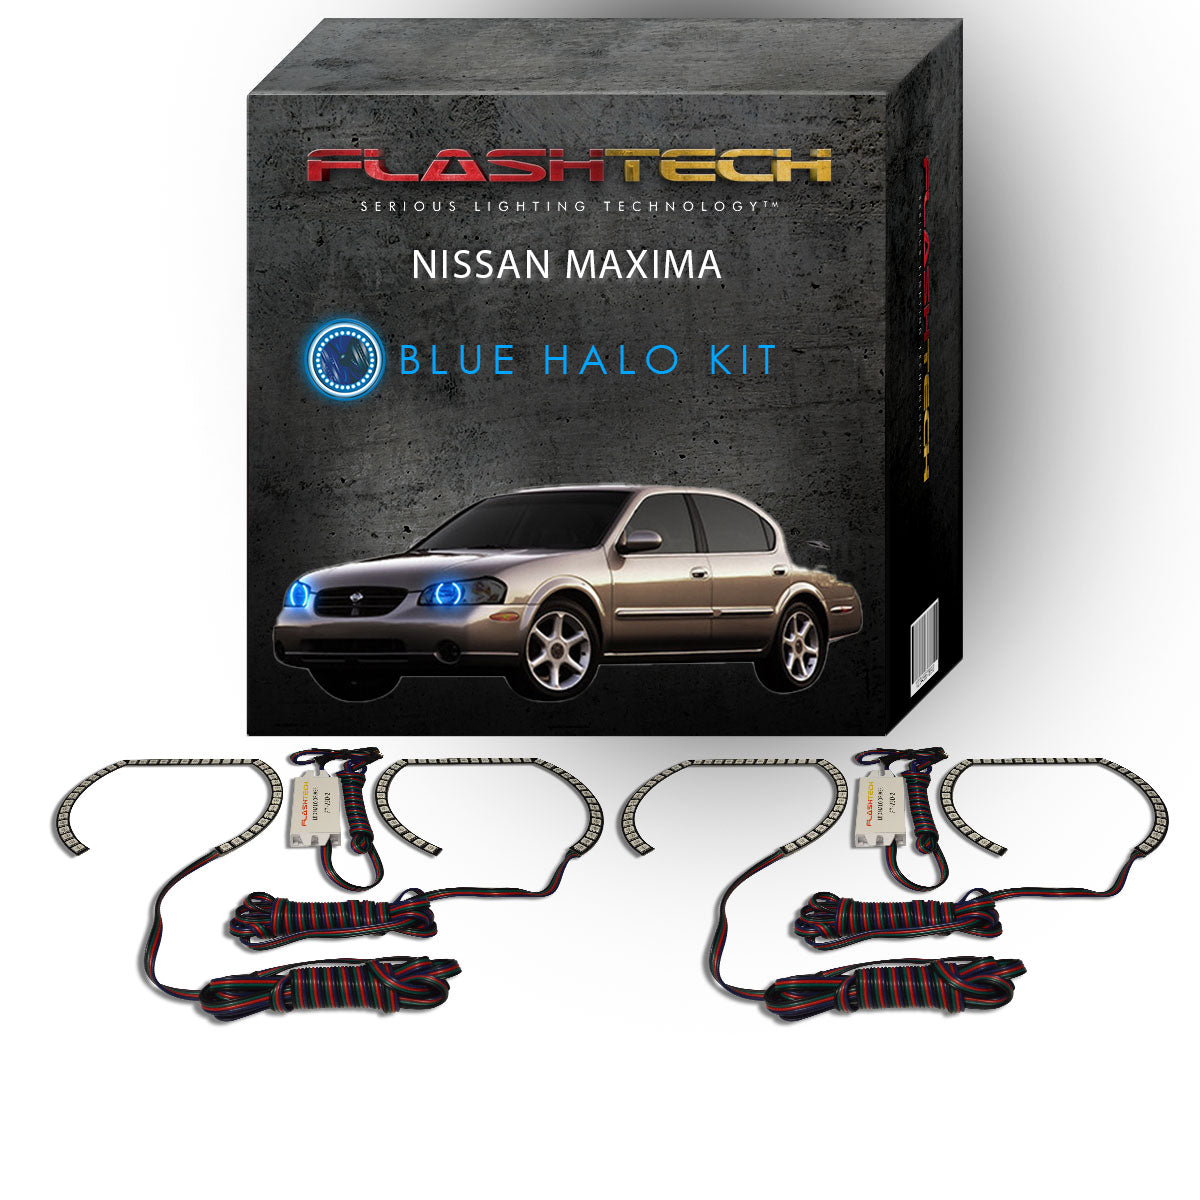 Nissan-Maxima-2000, 2001-LED-Halo-Headlights-RGB-No Remote-NI-MX0001-V3H